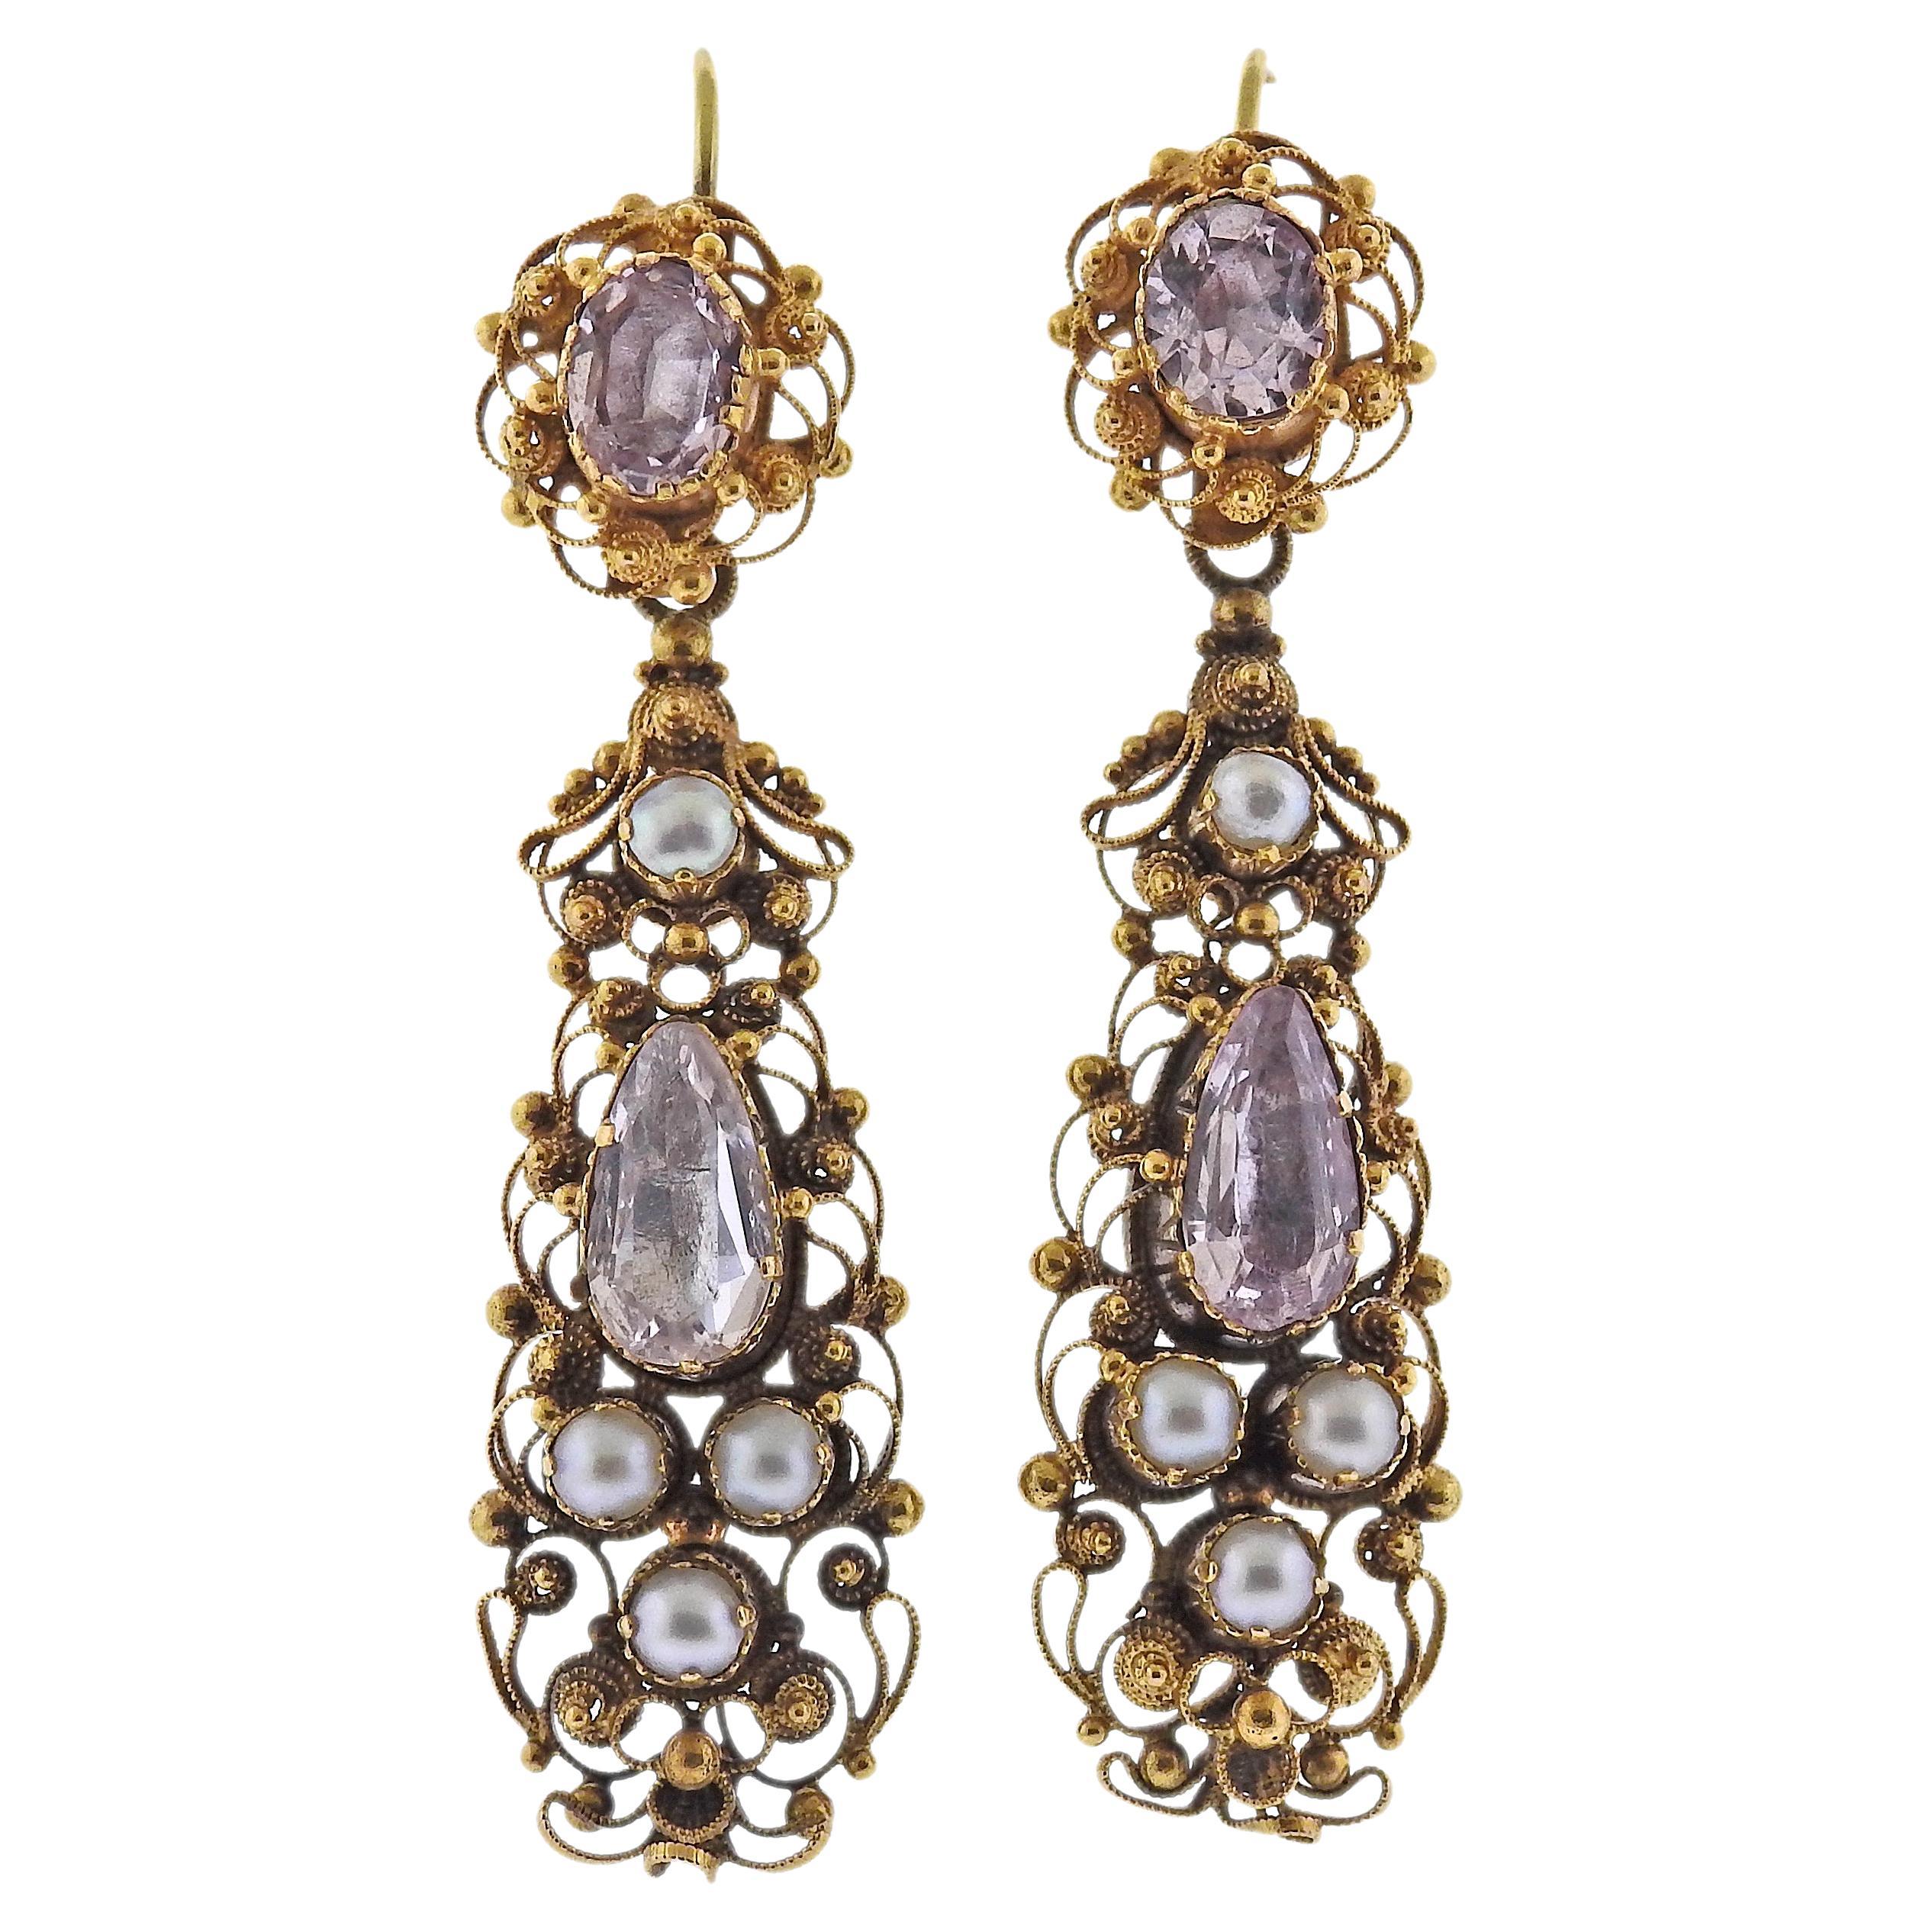 baroque earrings blue gem pearls Indian chandelier earrings ornate brass chandelier with 3 small blue cabochons Bohemian